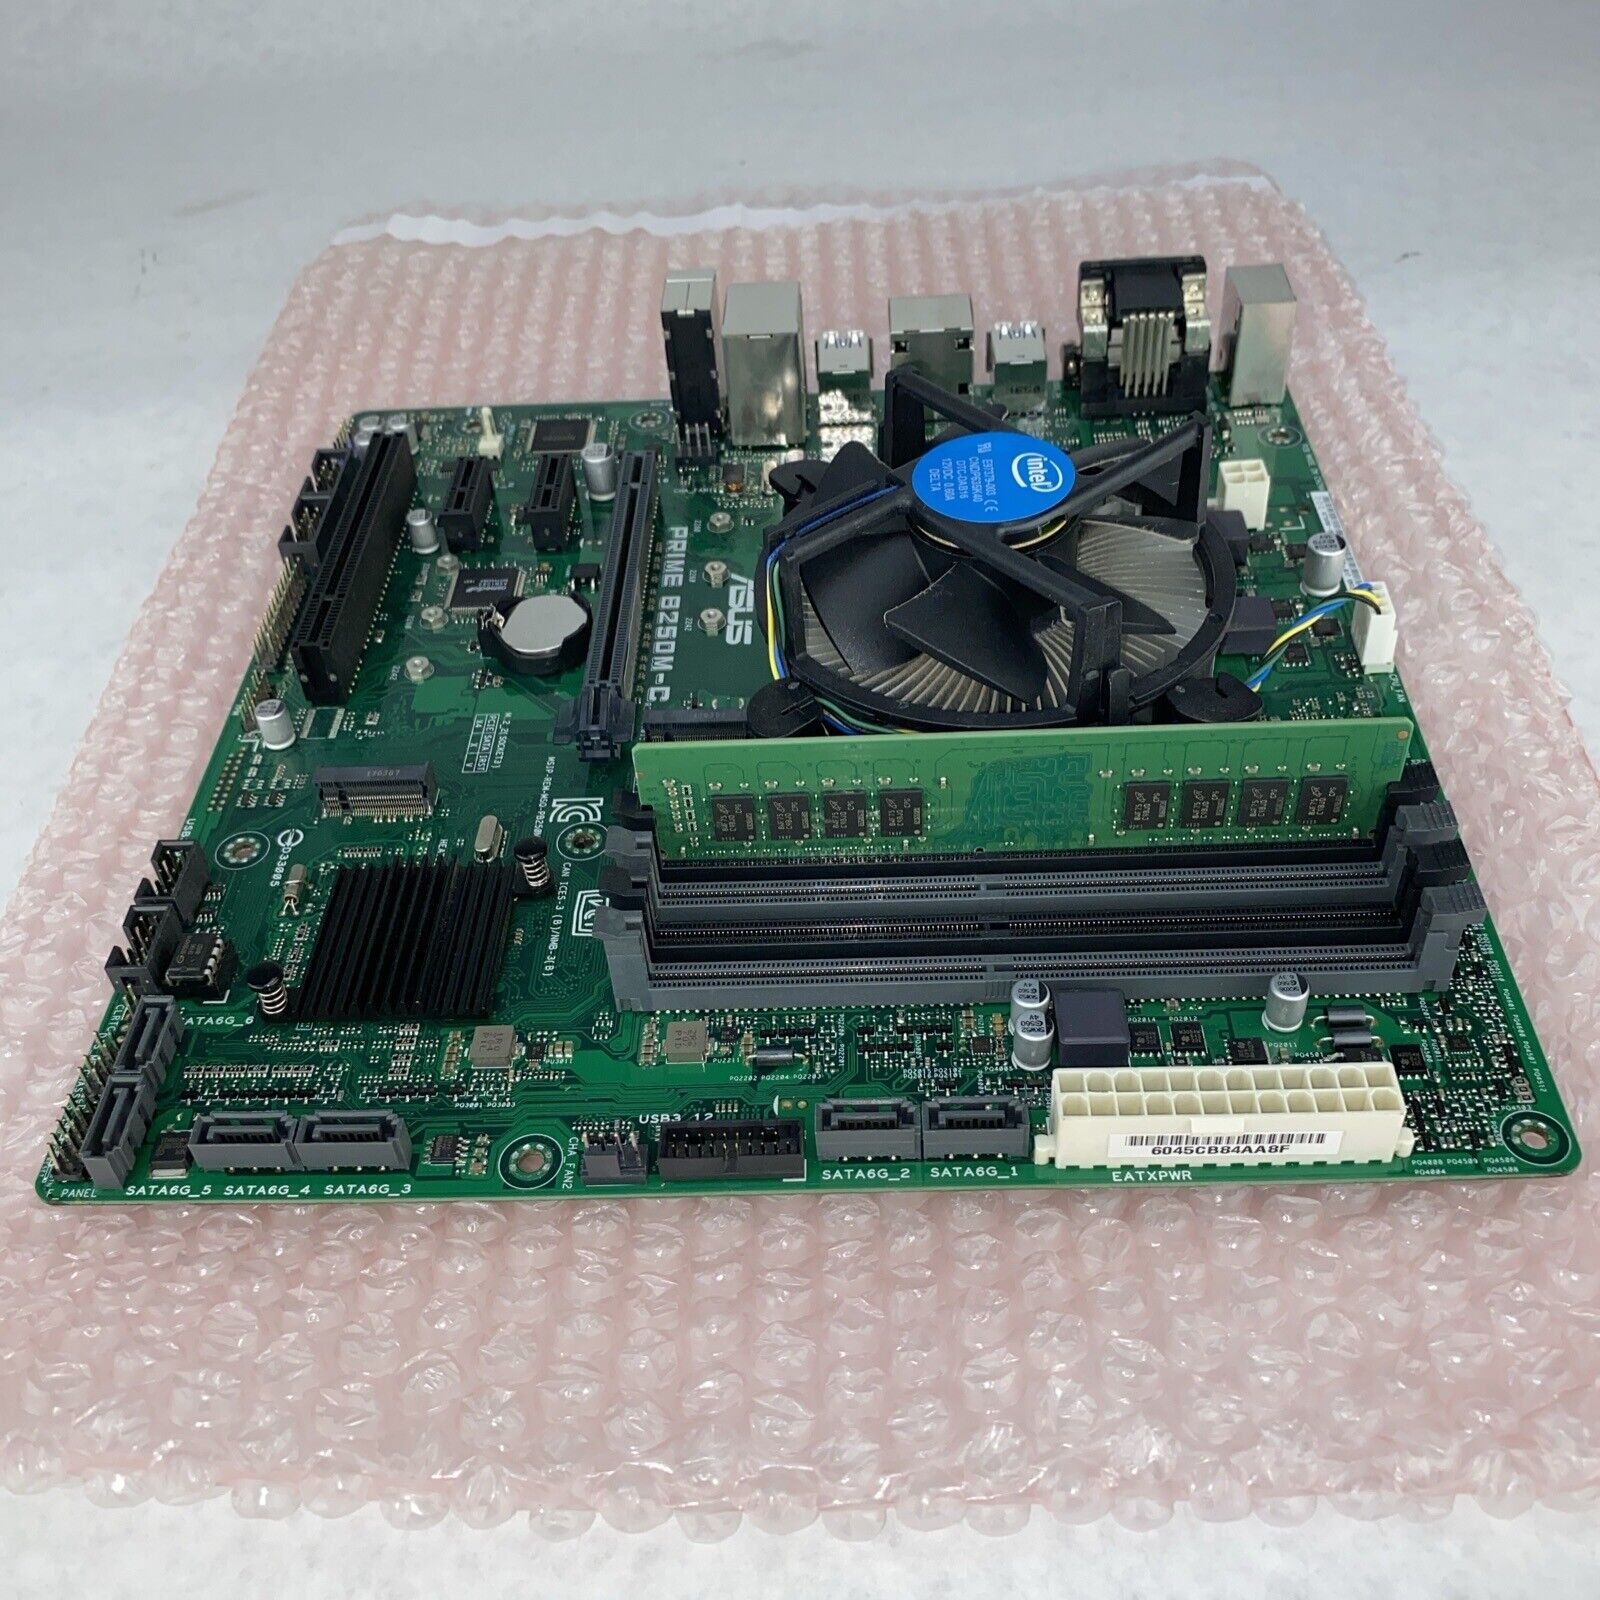 ASUS PRIME B250M-C CSM LGA1151 MOTHERBOARD i5-7400 3.0GHz 8GB RAM IO